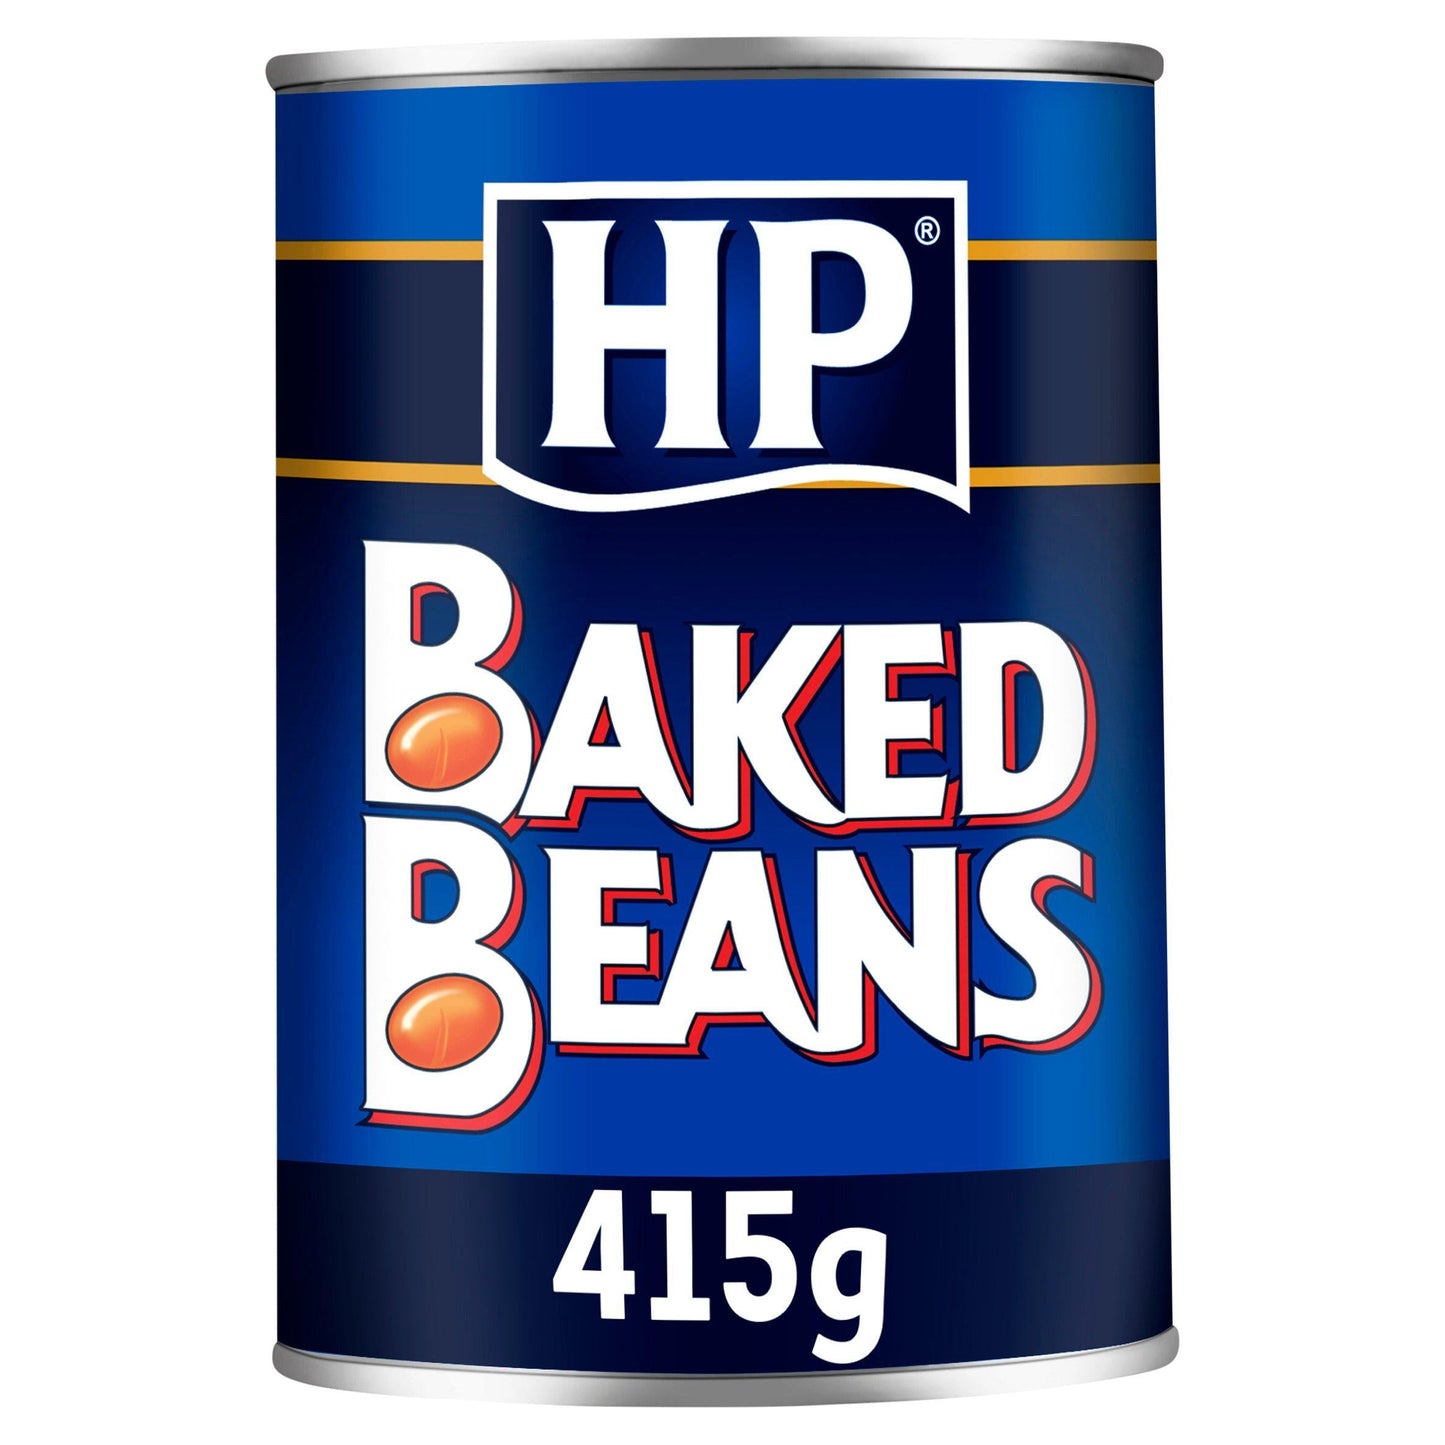 HP Baked Beans 415g